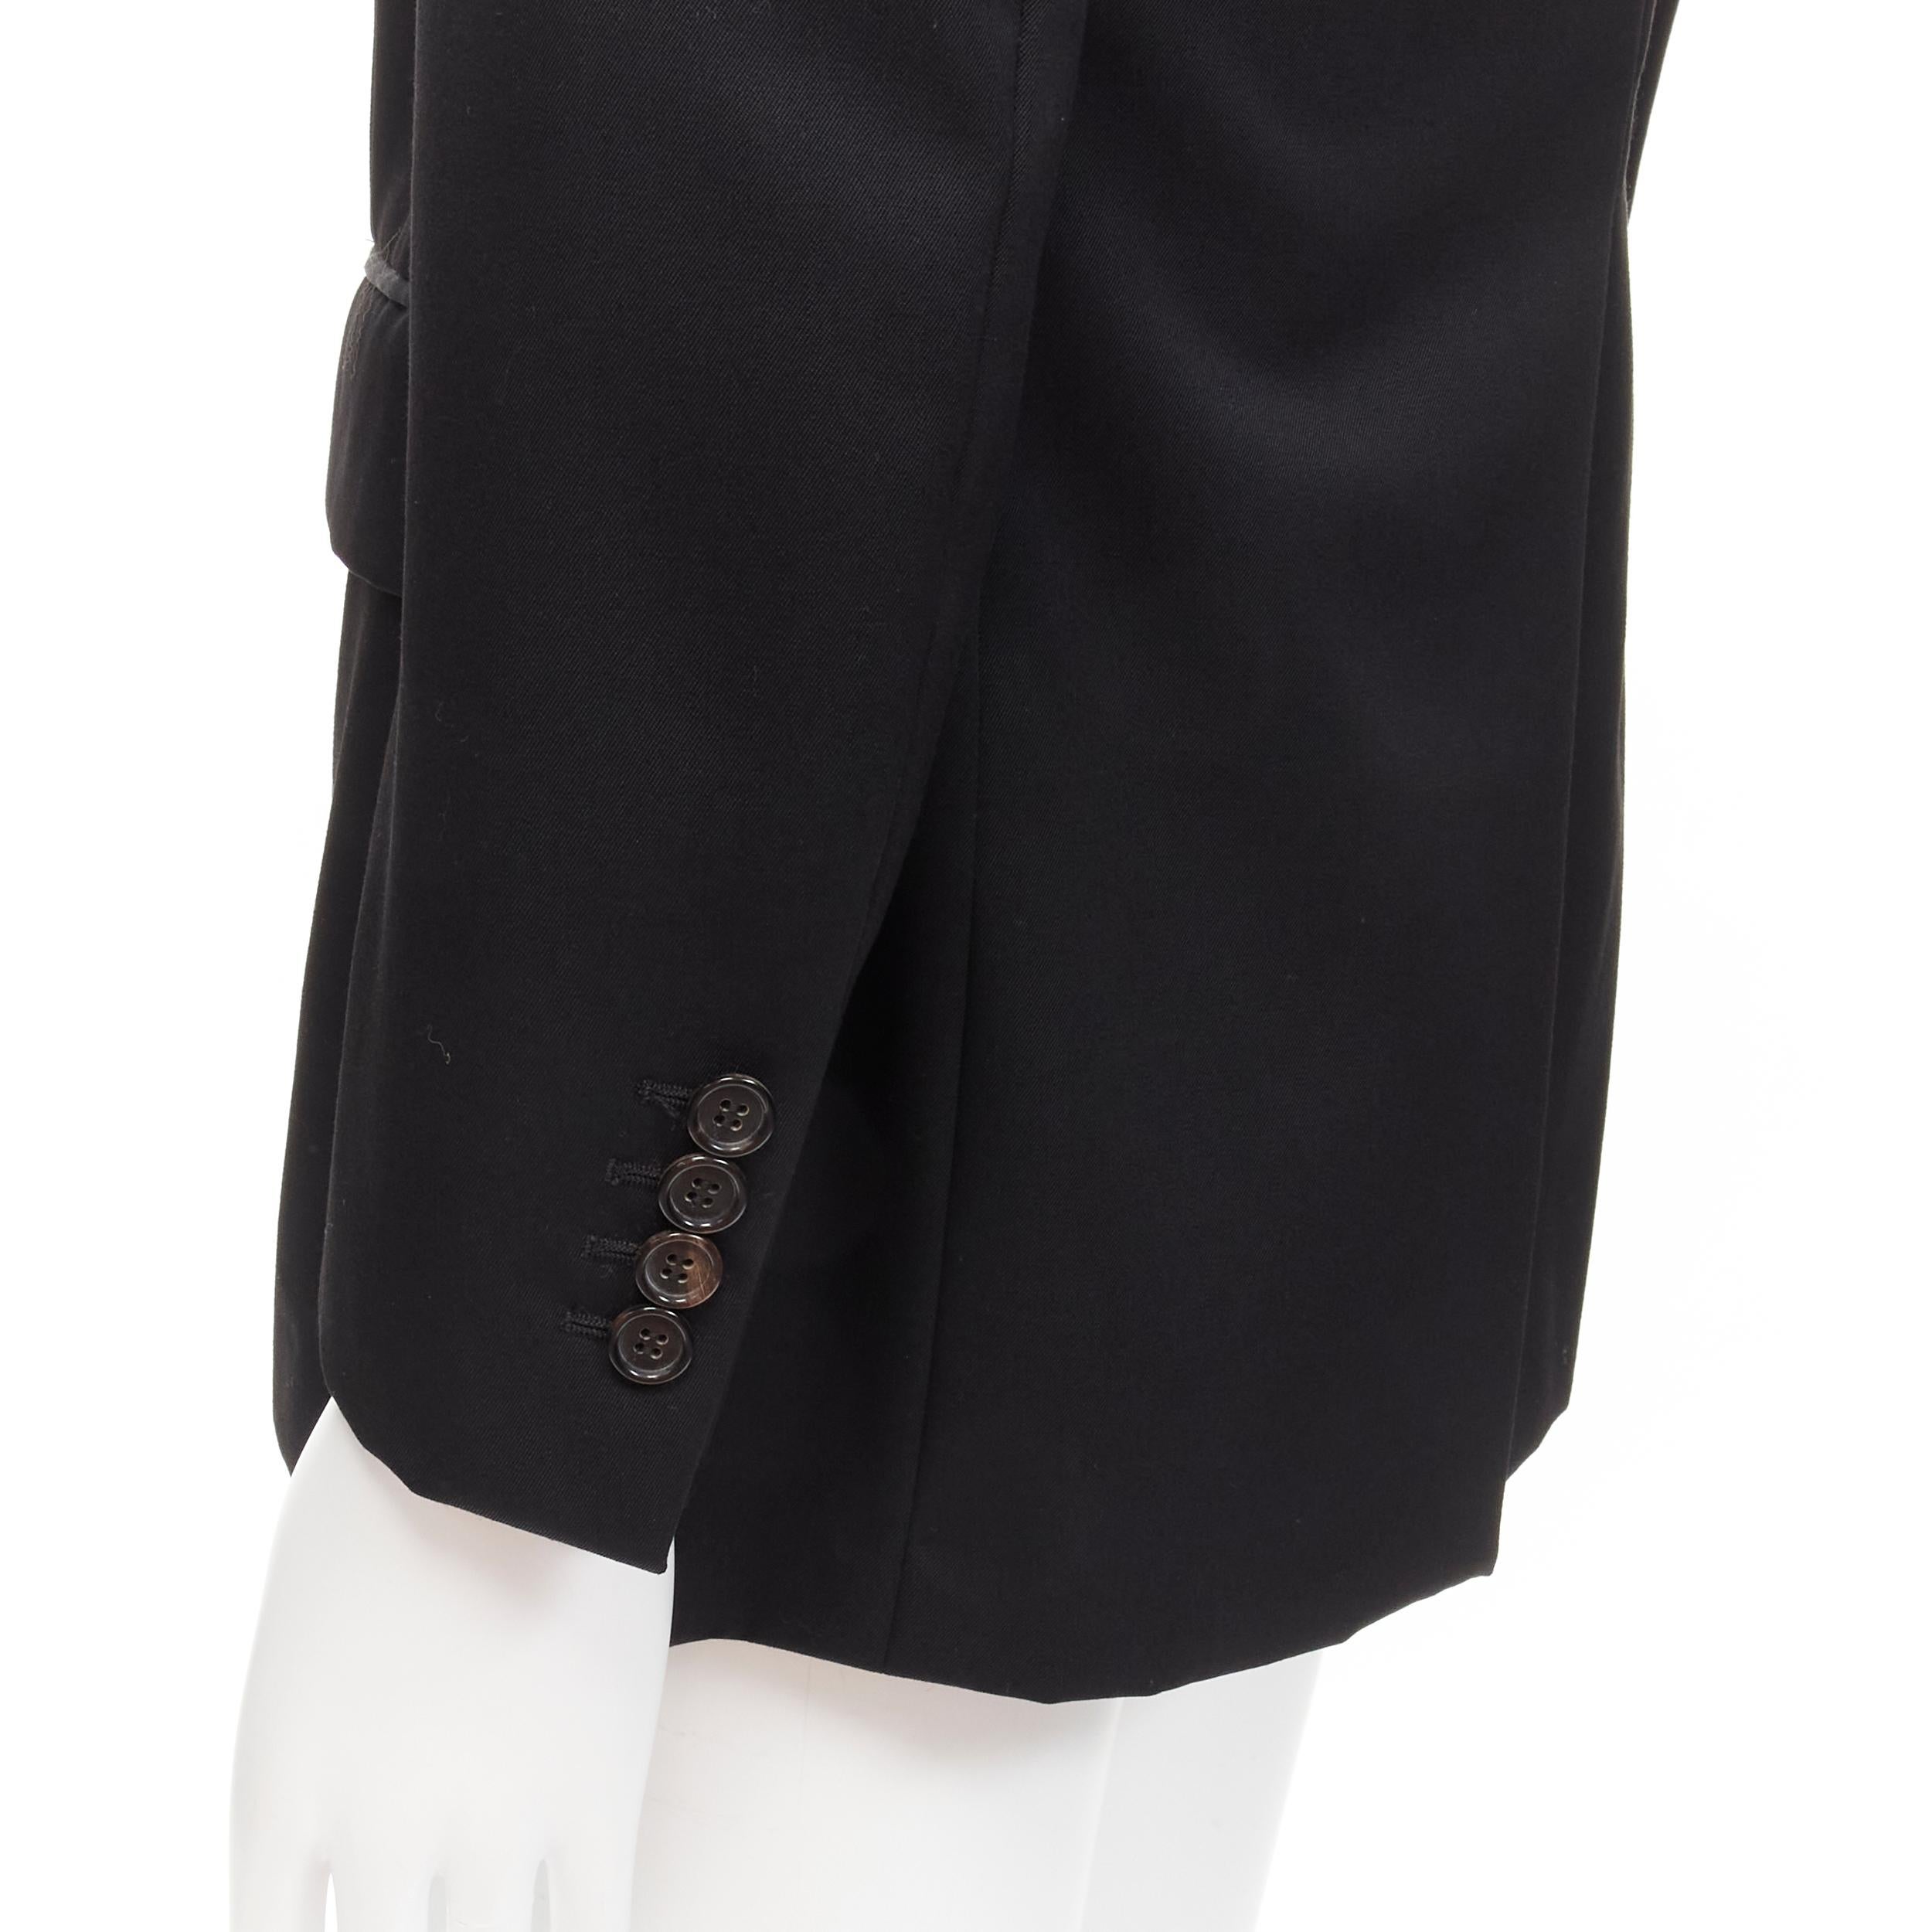 DIOR HOMME Hedi Slimane leather collar classic 2-button blazer jacket FR46 S 5